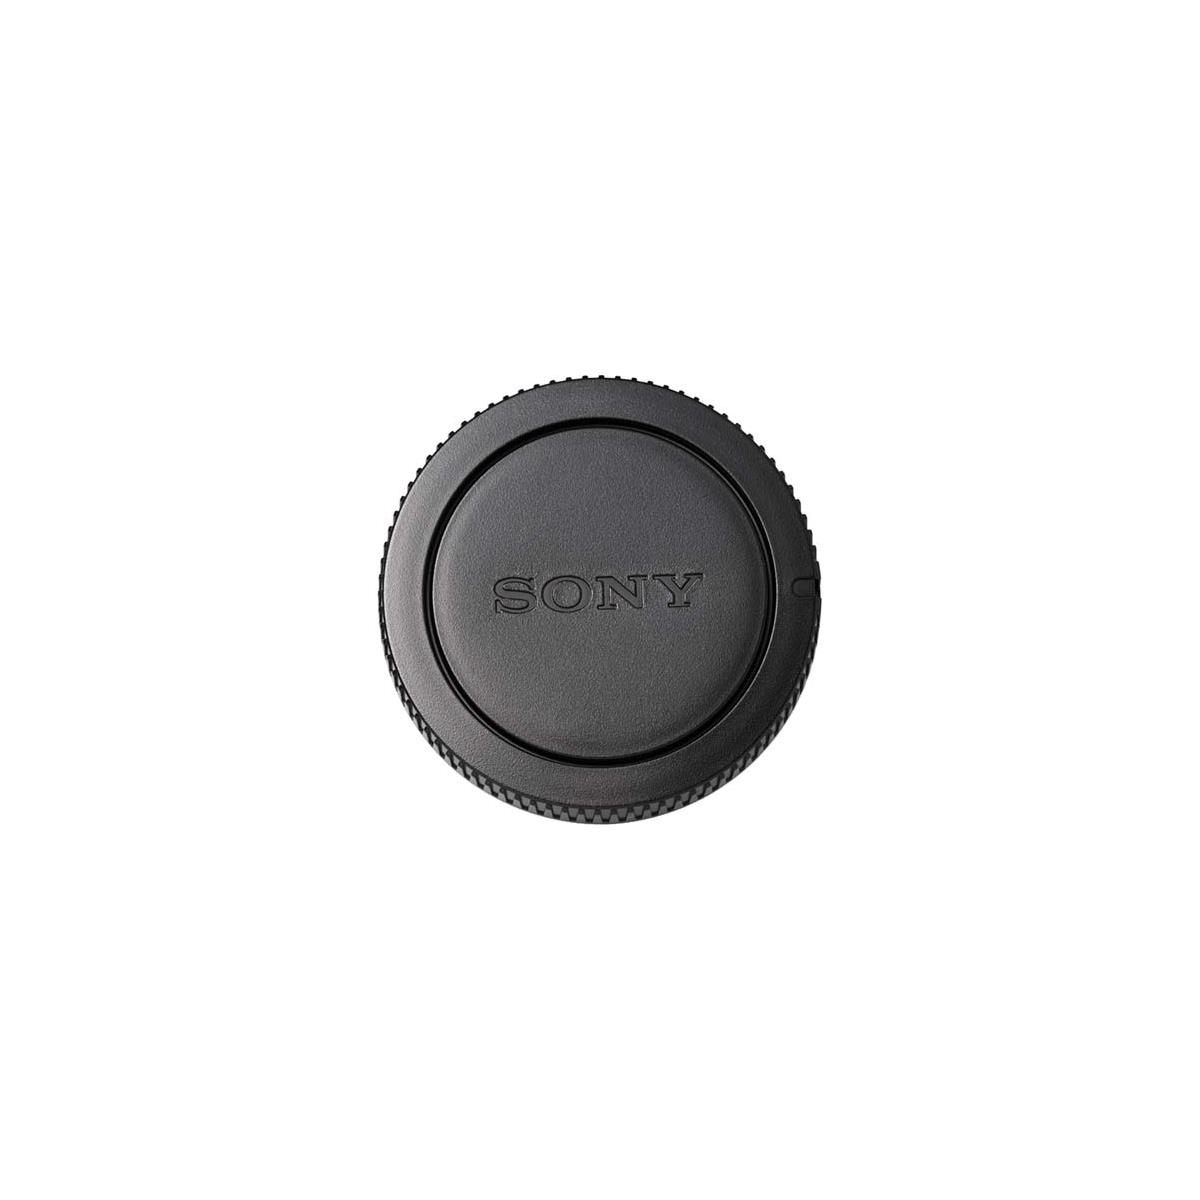 Sony ALCB55 Body Cap for the Sony Alpha  Digital SLR